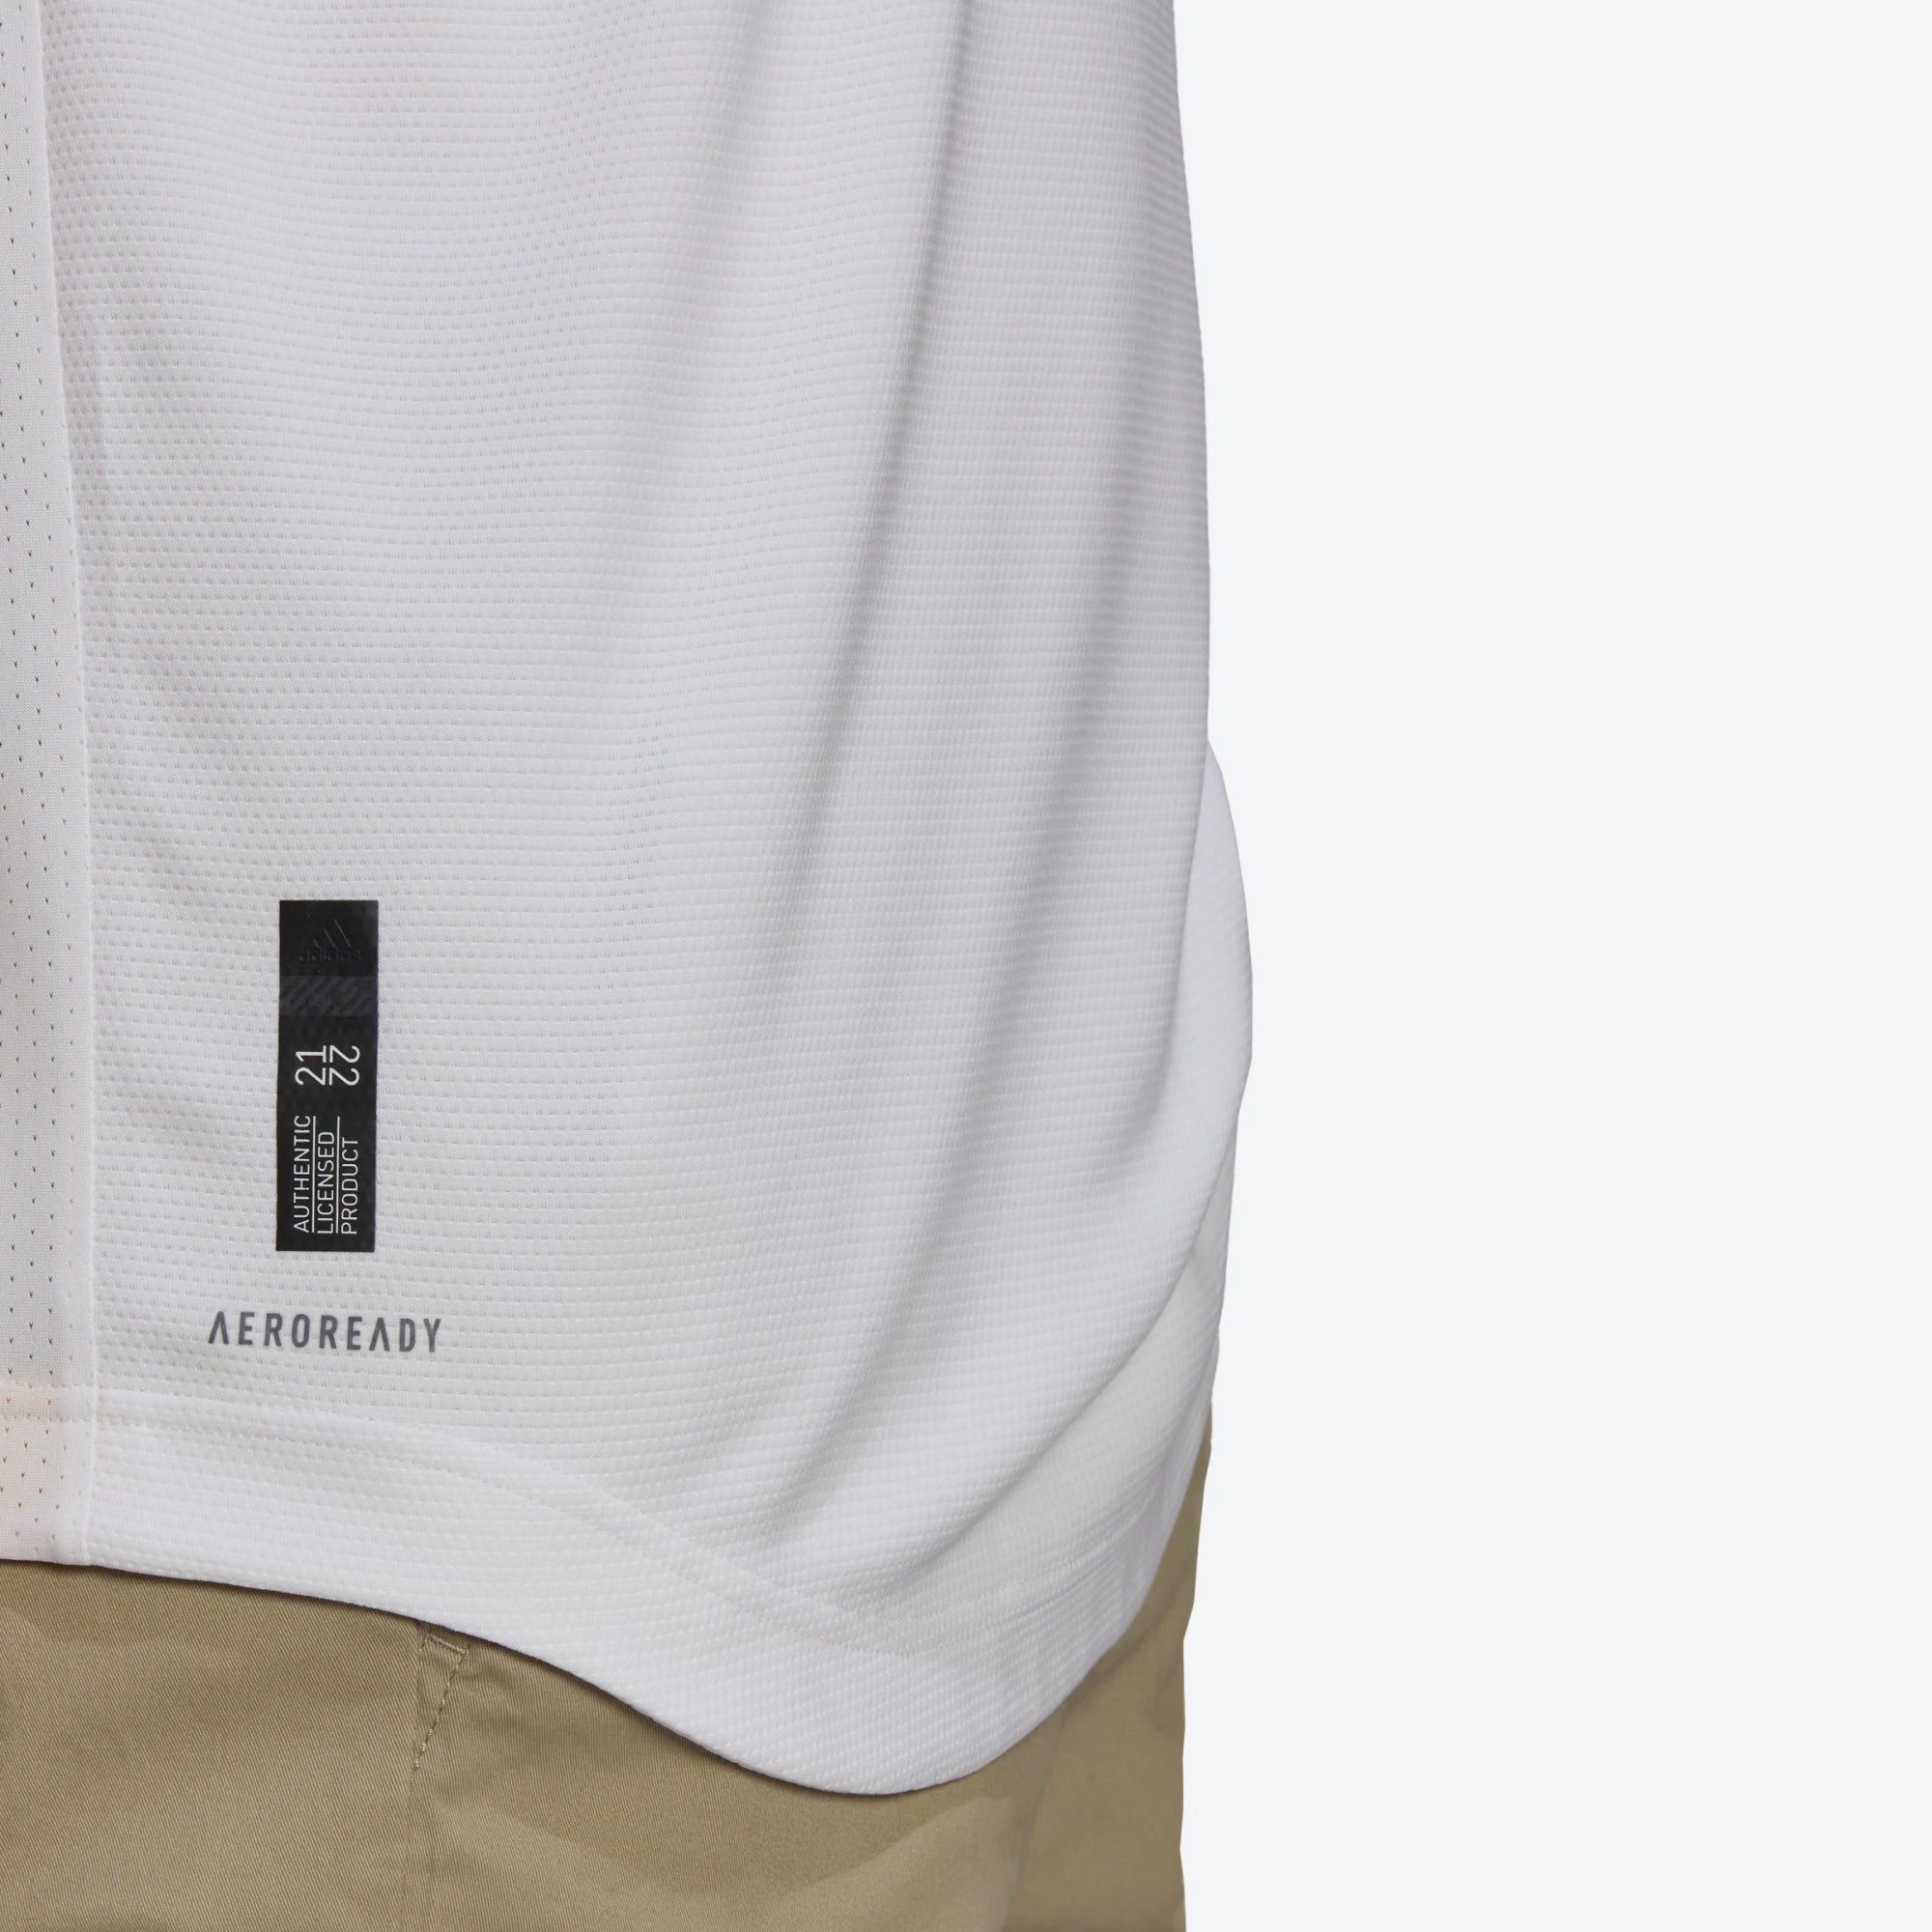 Adidas 2022 LA Galaxy Home Shirt Leaked » The Kitman